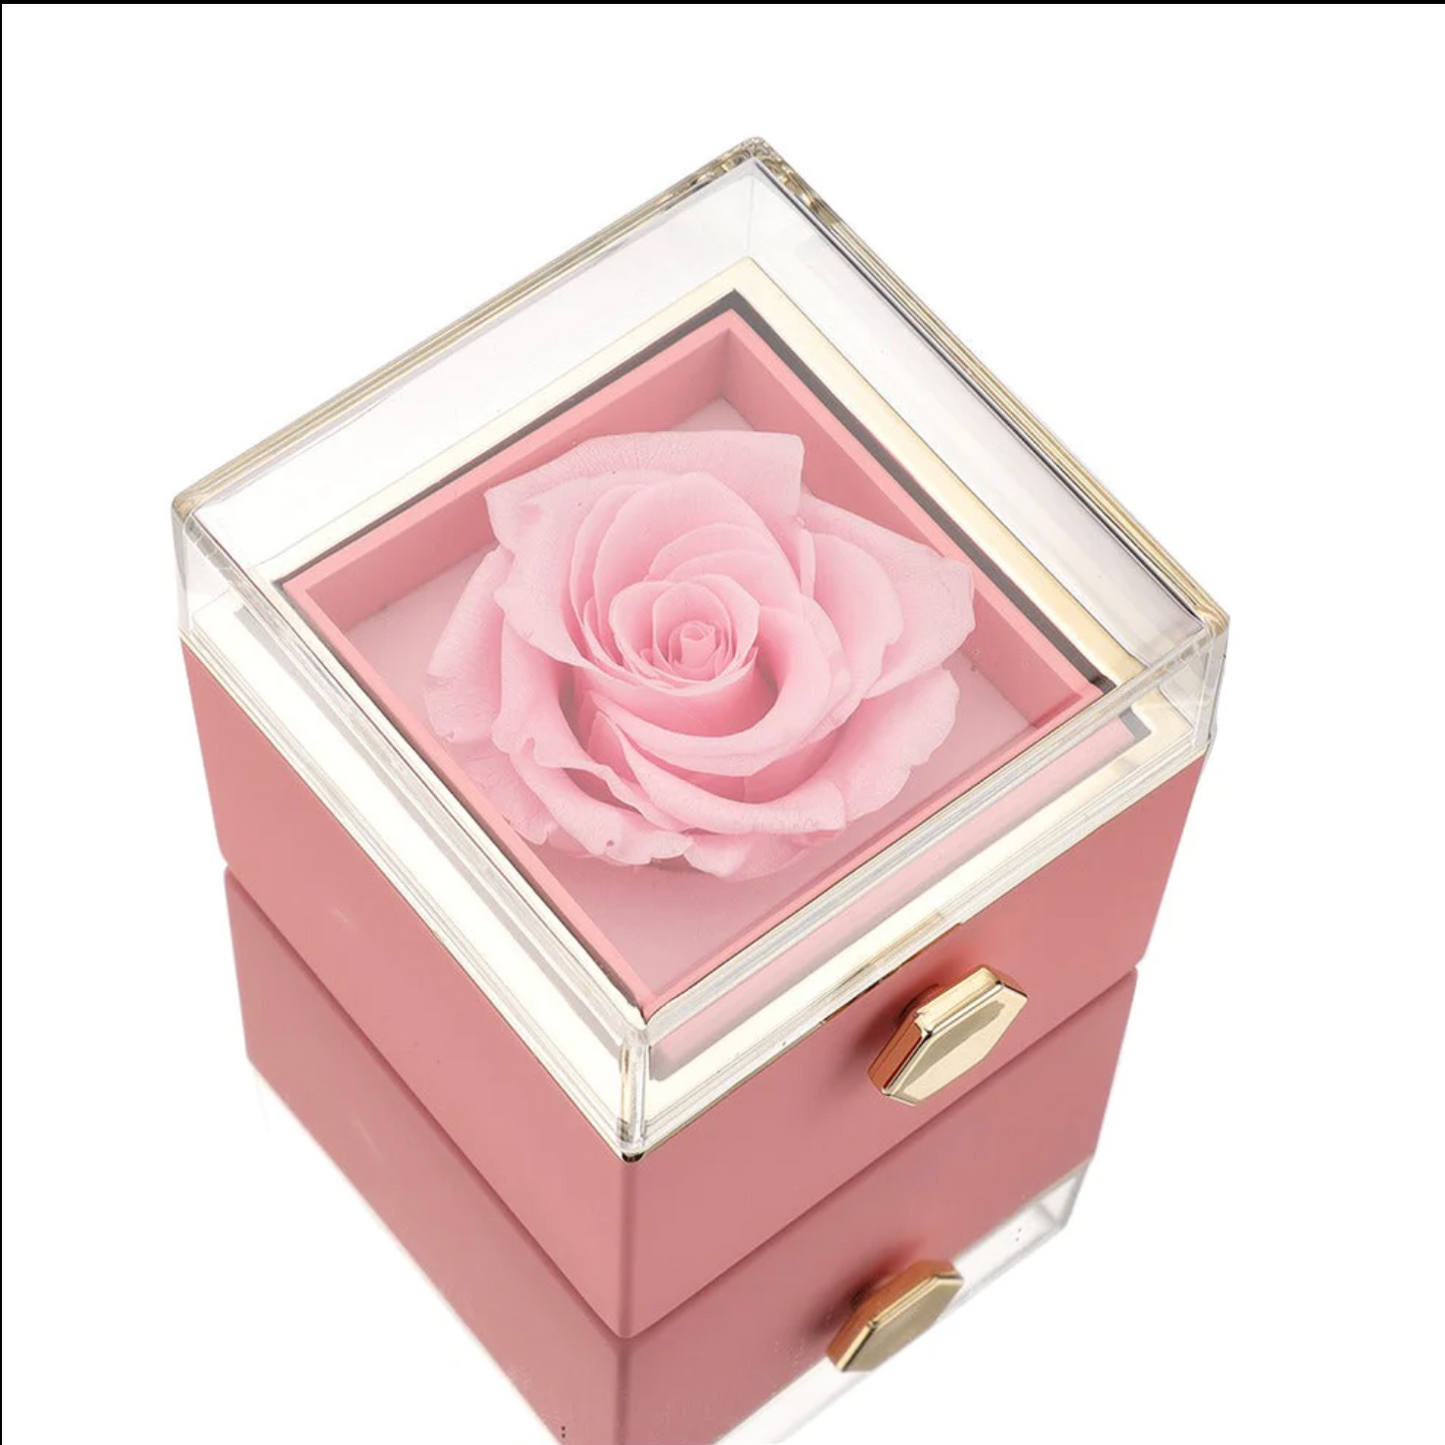 Rose box packaging